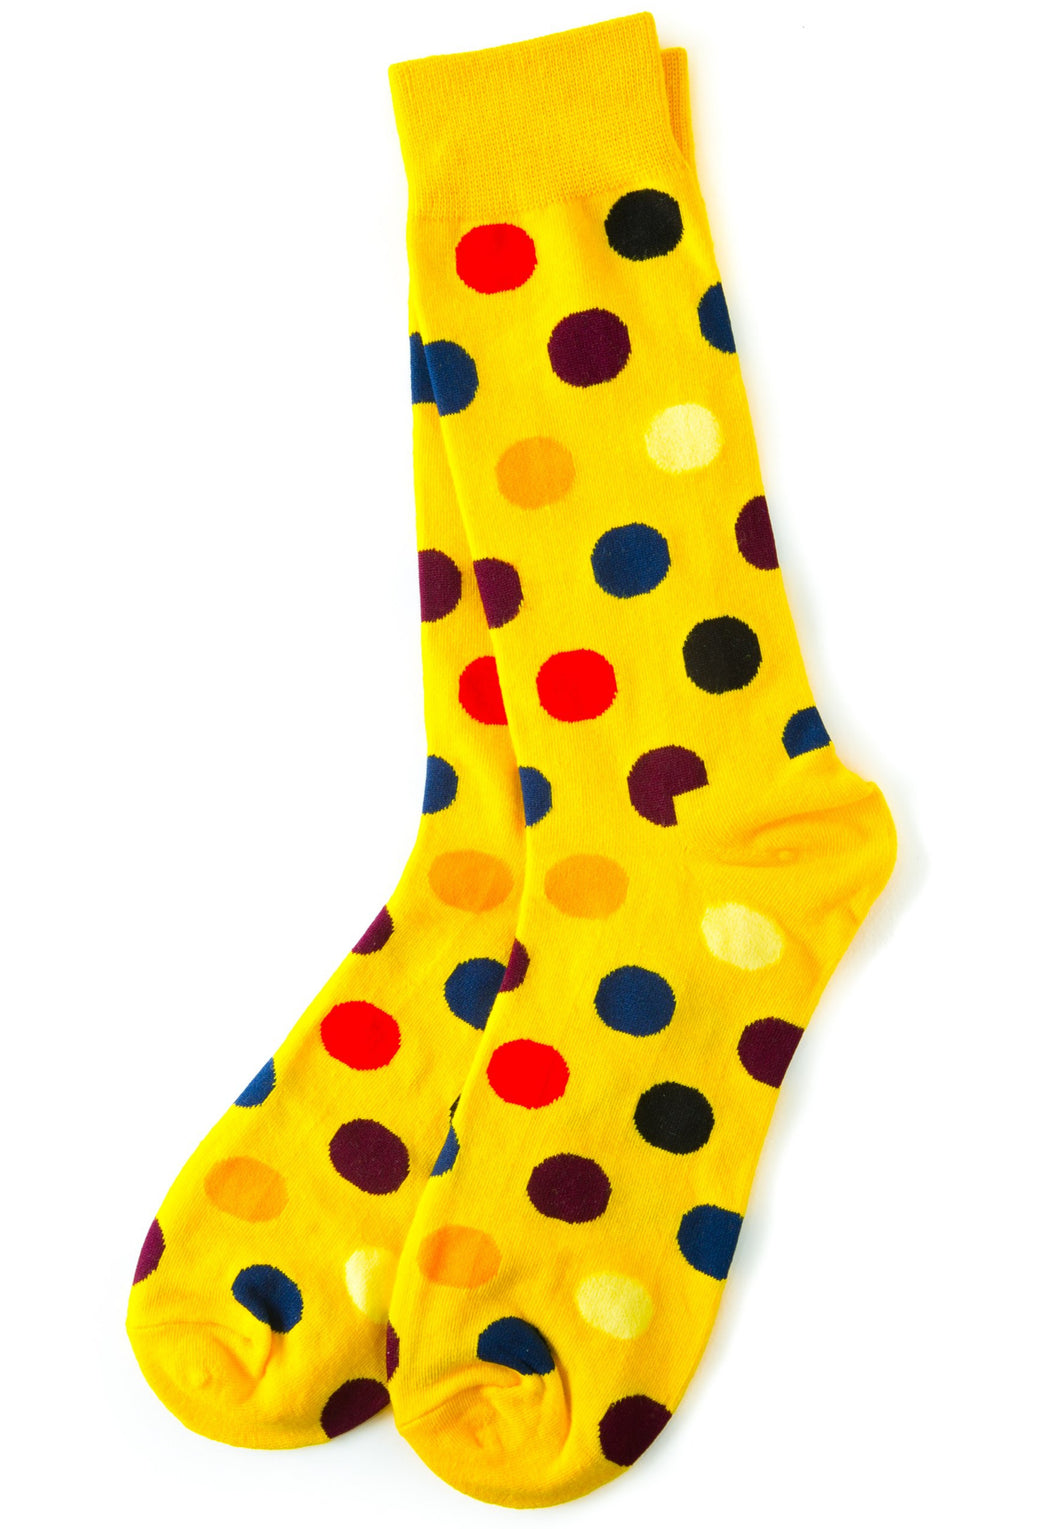 yellow polka dot socks